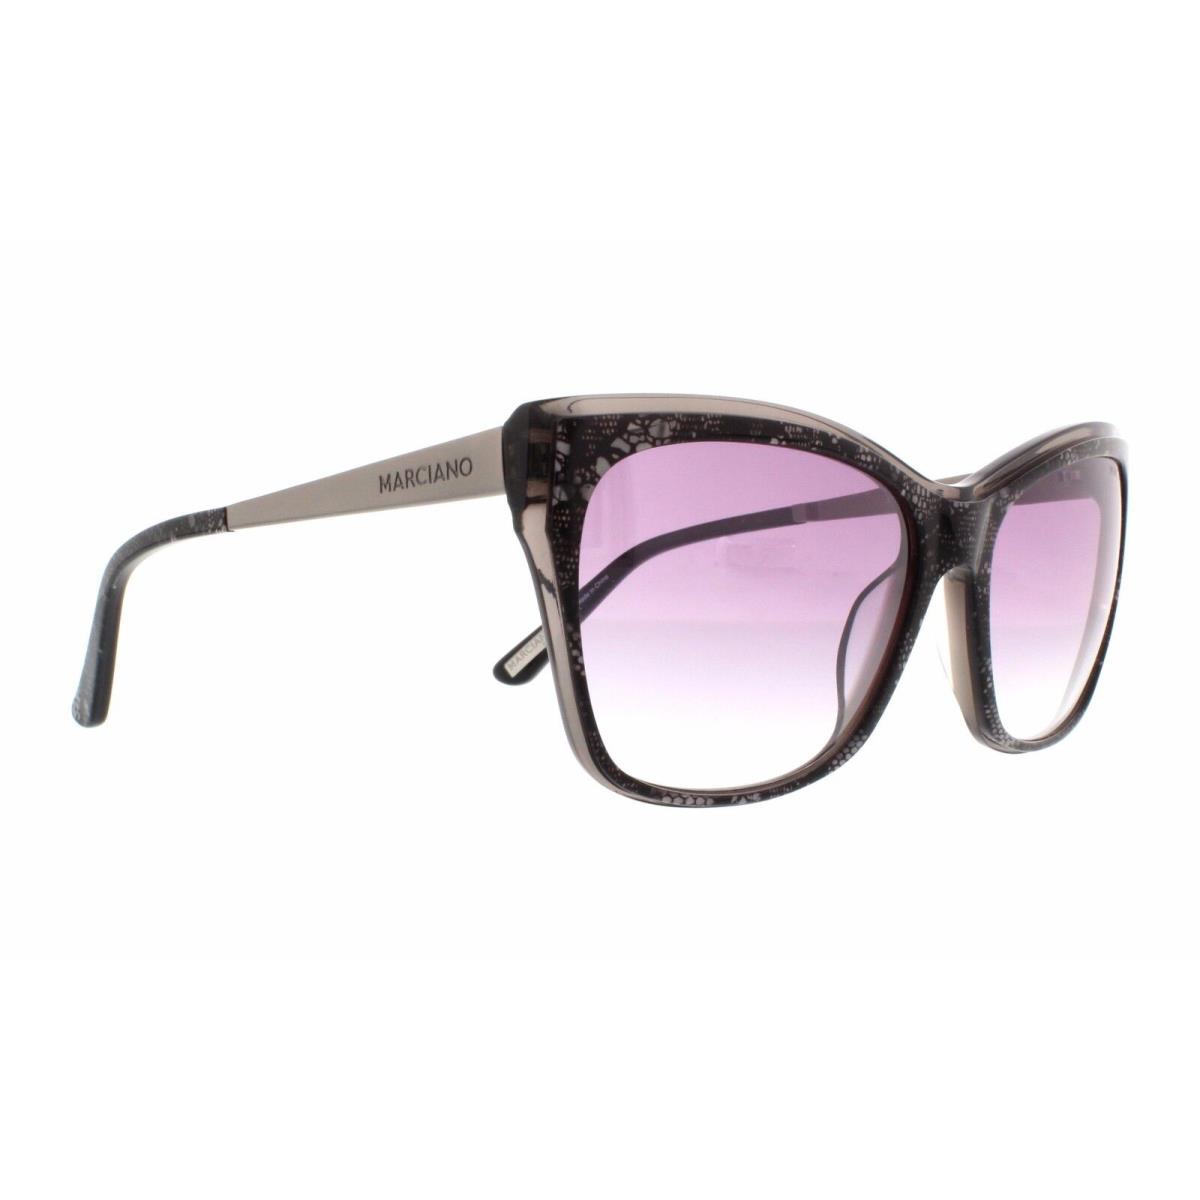 Guess sunglasses  - Black Lace Frame, Smoke Lens